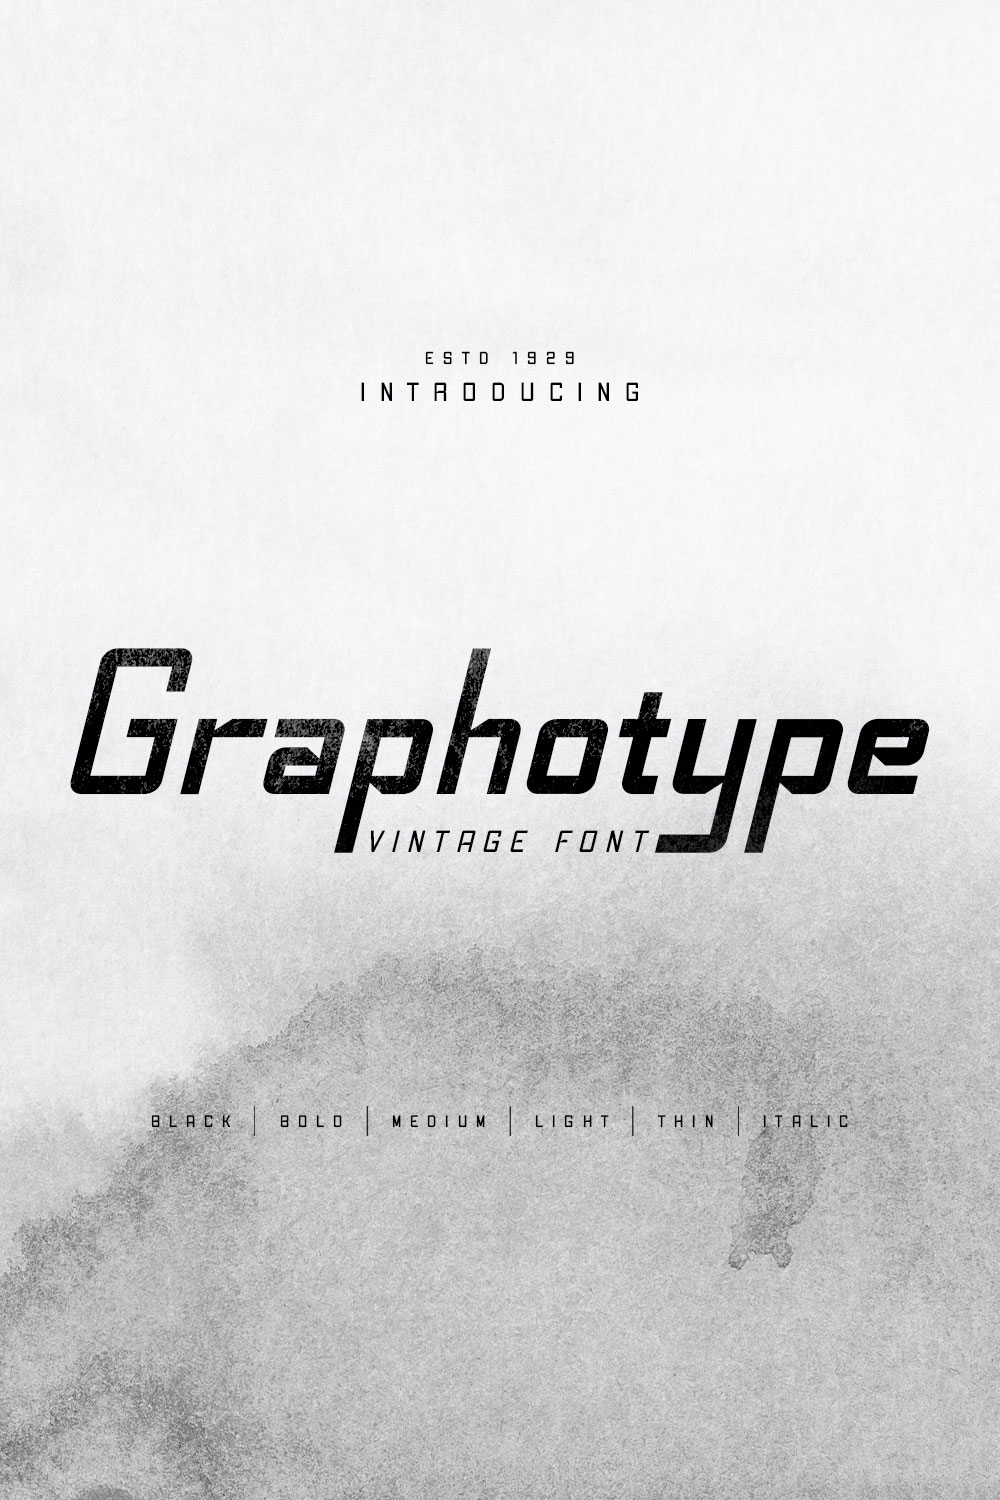 Graphotype Vintage Font - pinterest image preview.